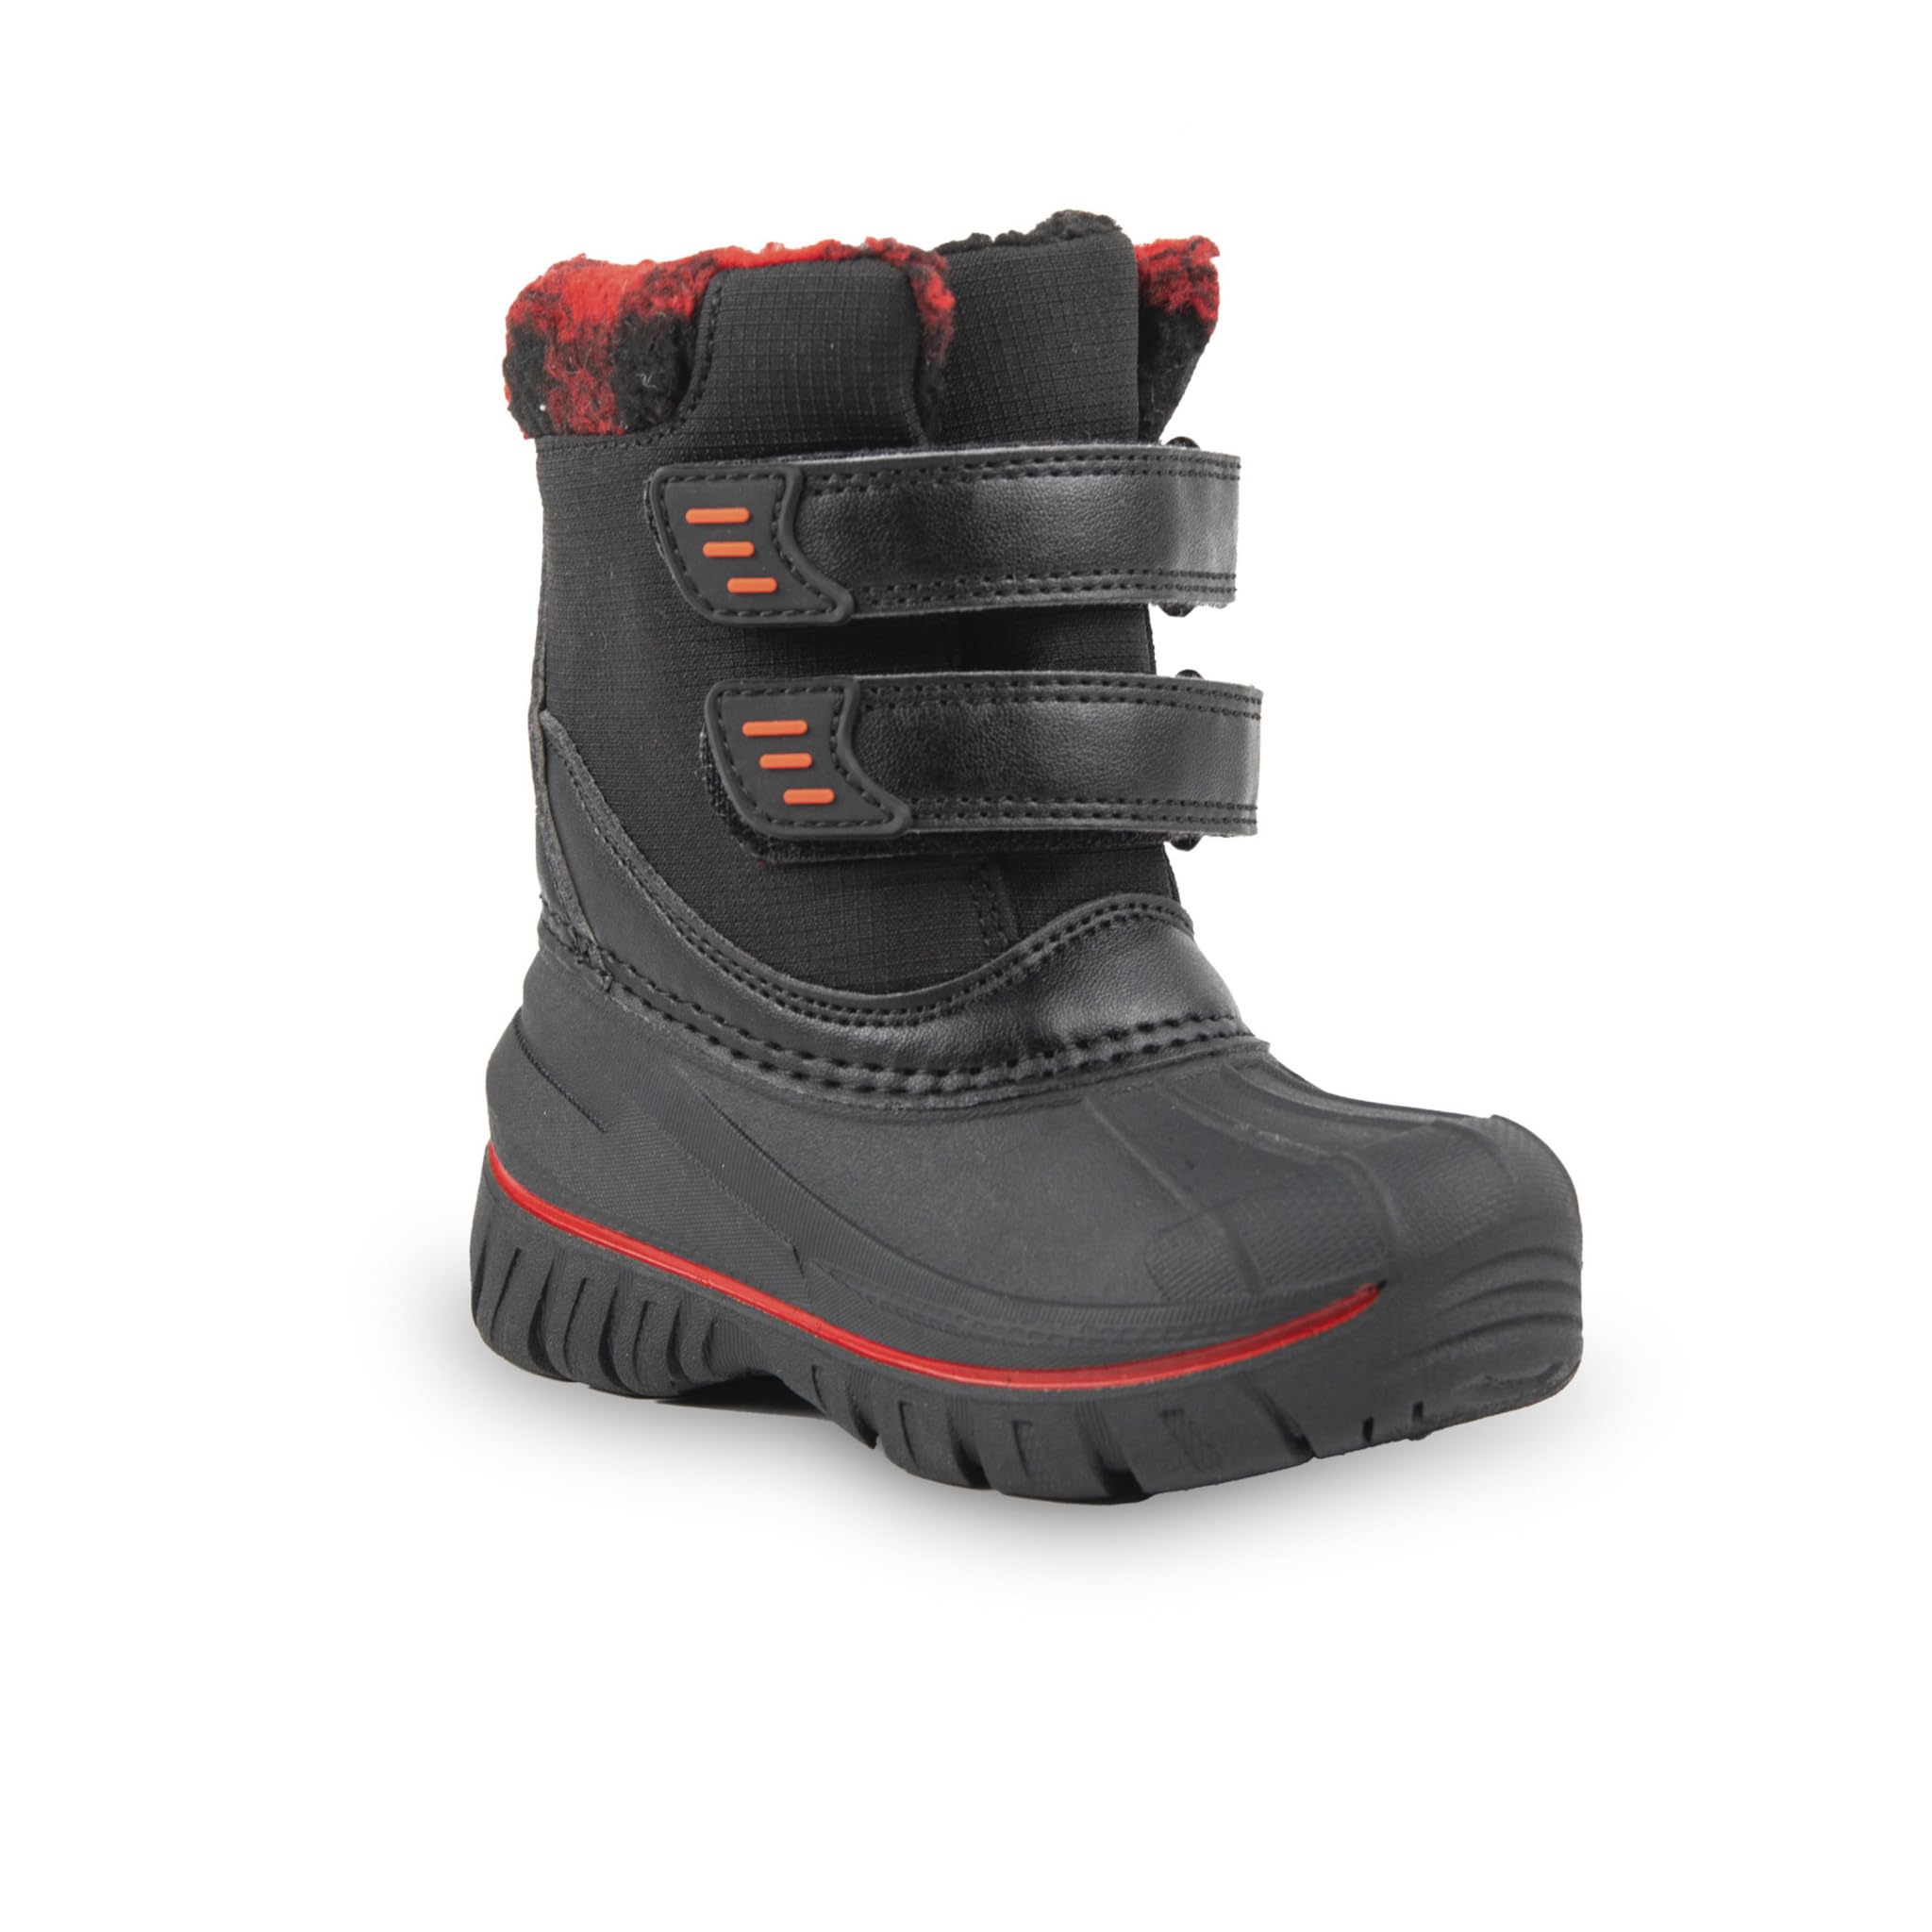 Stride Rite 360 Unisex-Child Cade Snow Boot